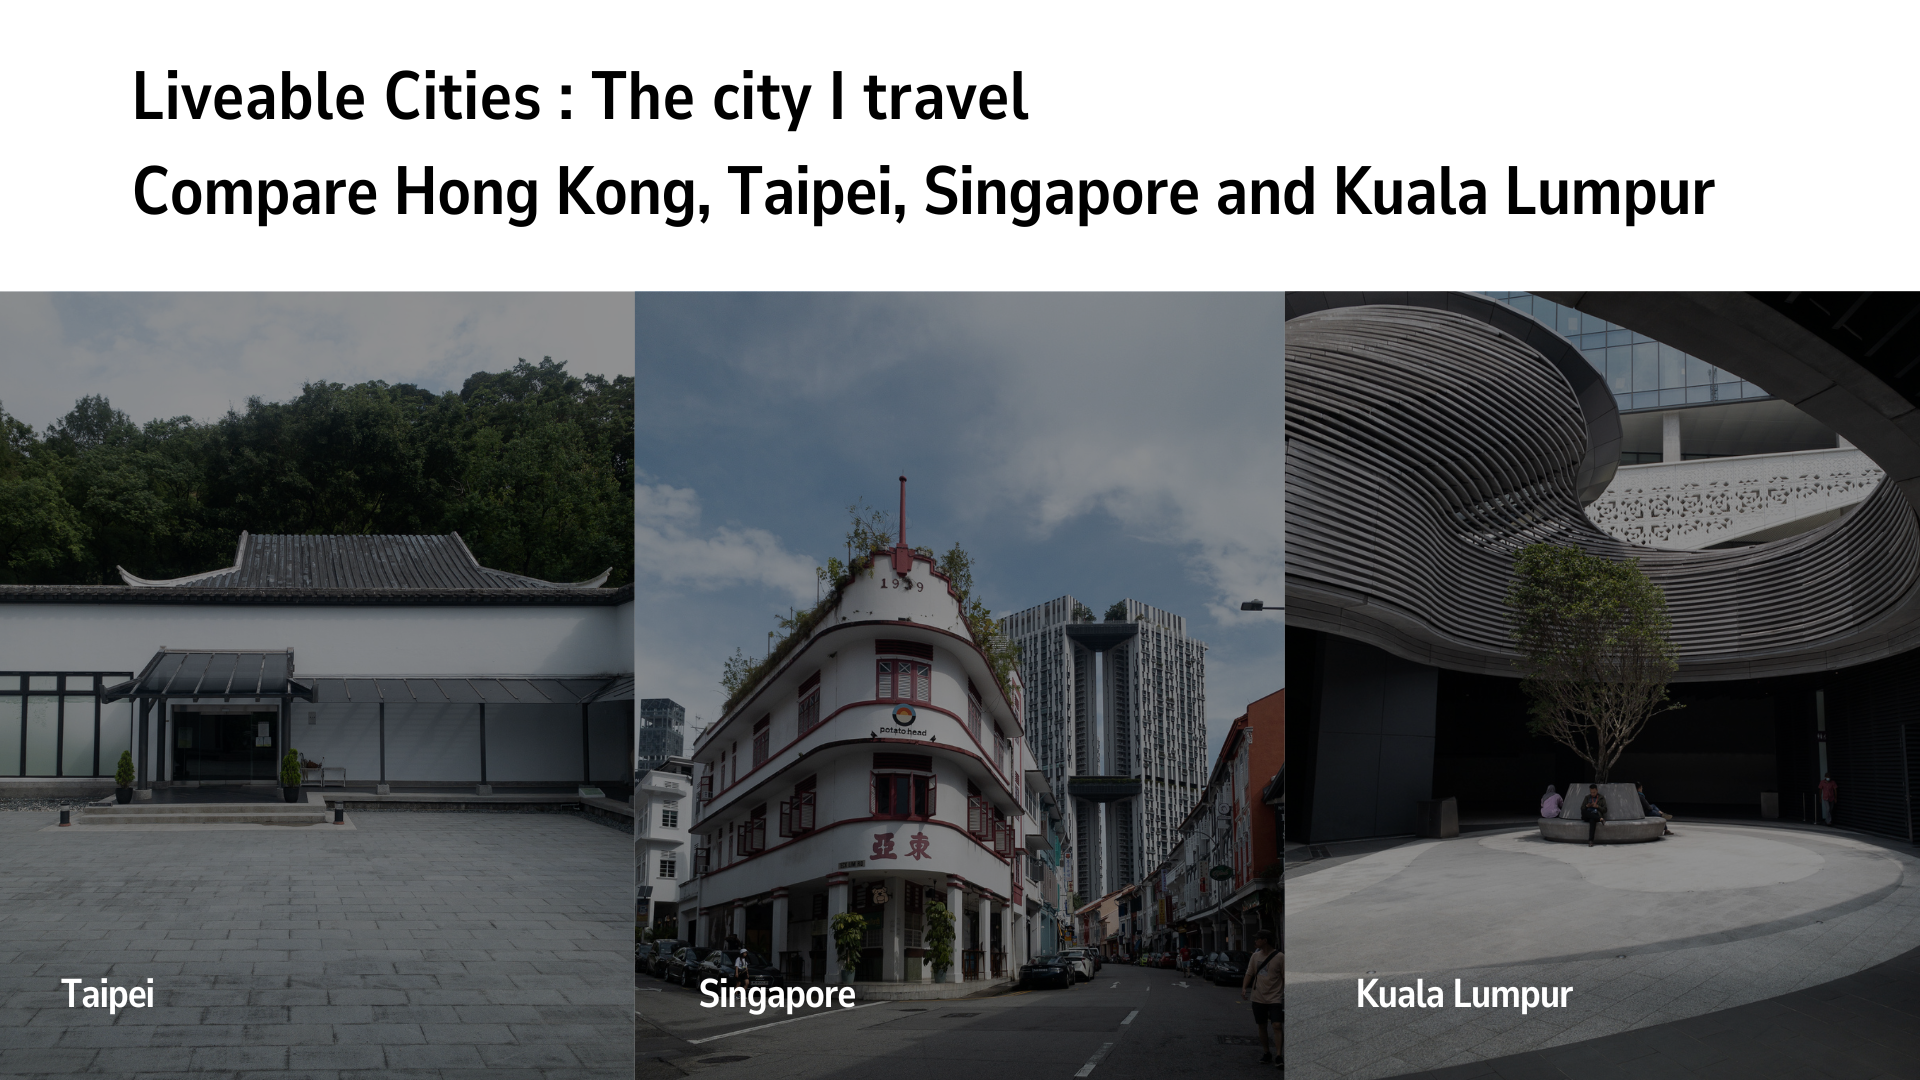 Liveable Cities: Compare Hong Kong, Taipei, Singapore and Kuala Lumpur